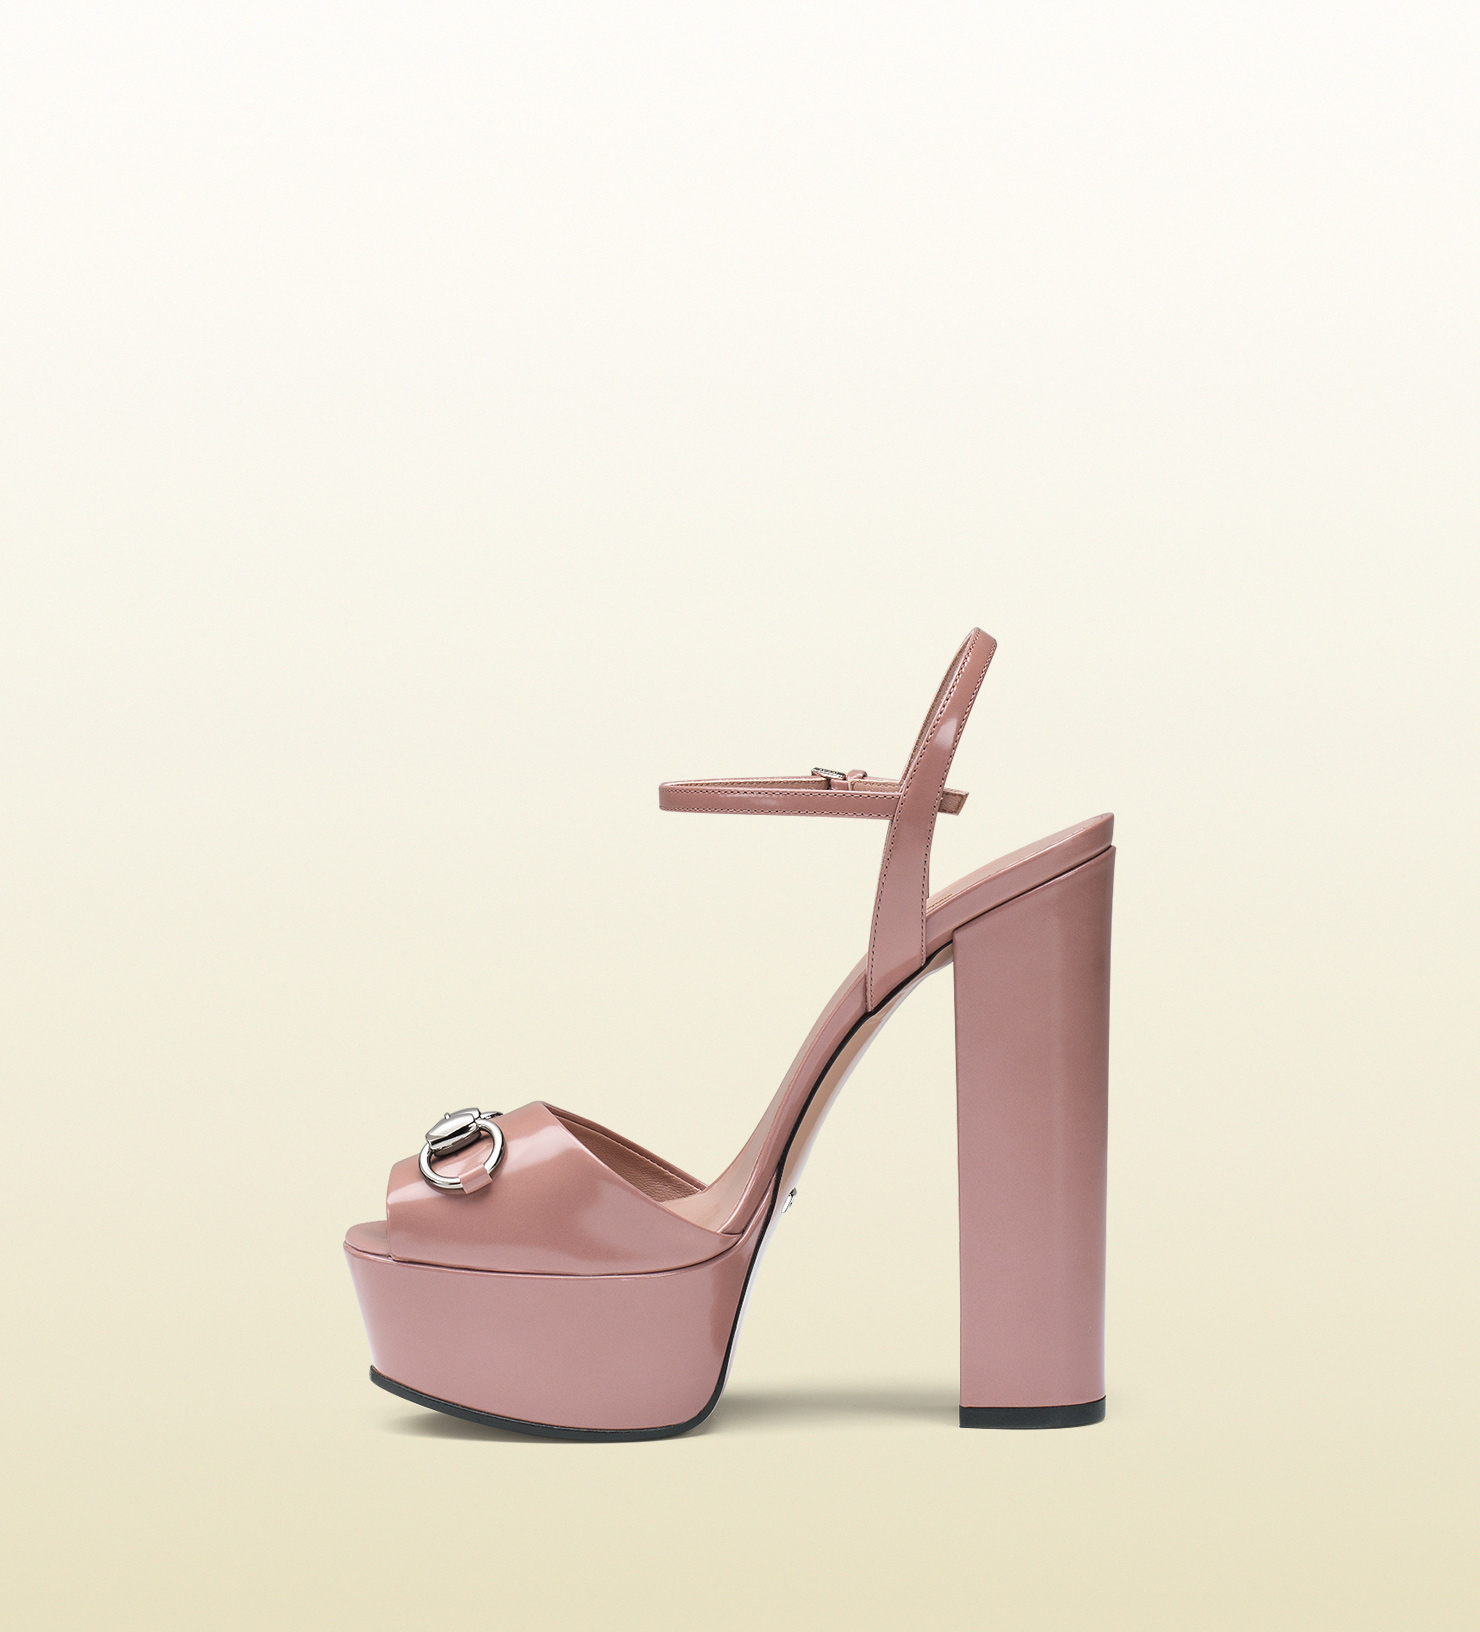 Lyst - Gucci Leather Platform Horsebit Sandal in Pink